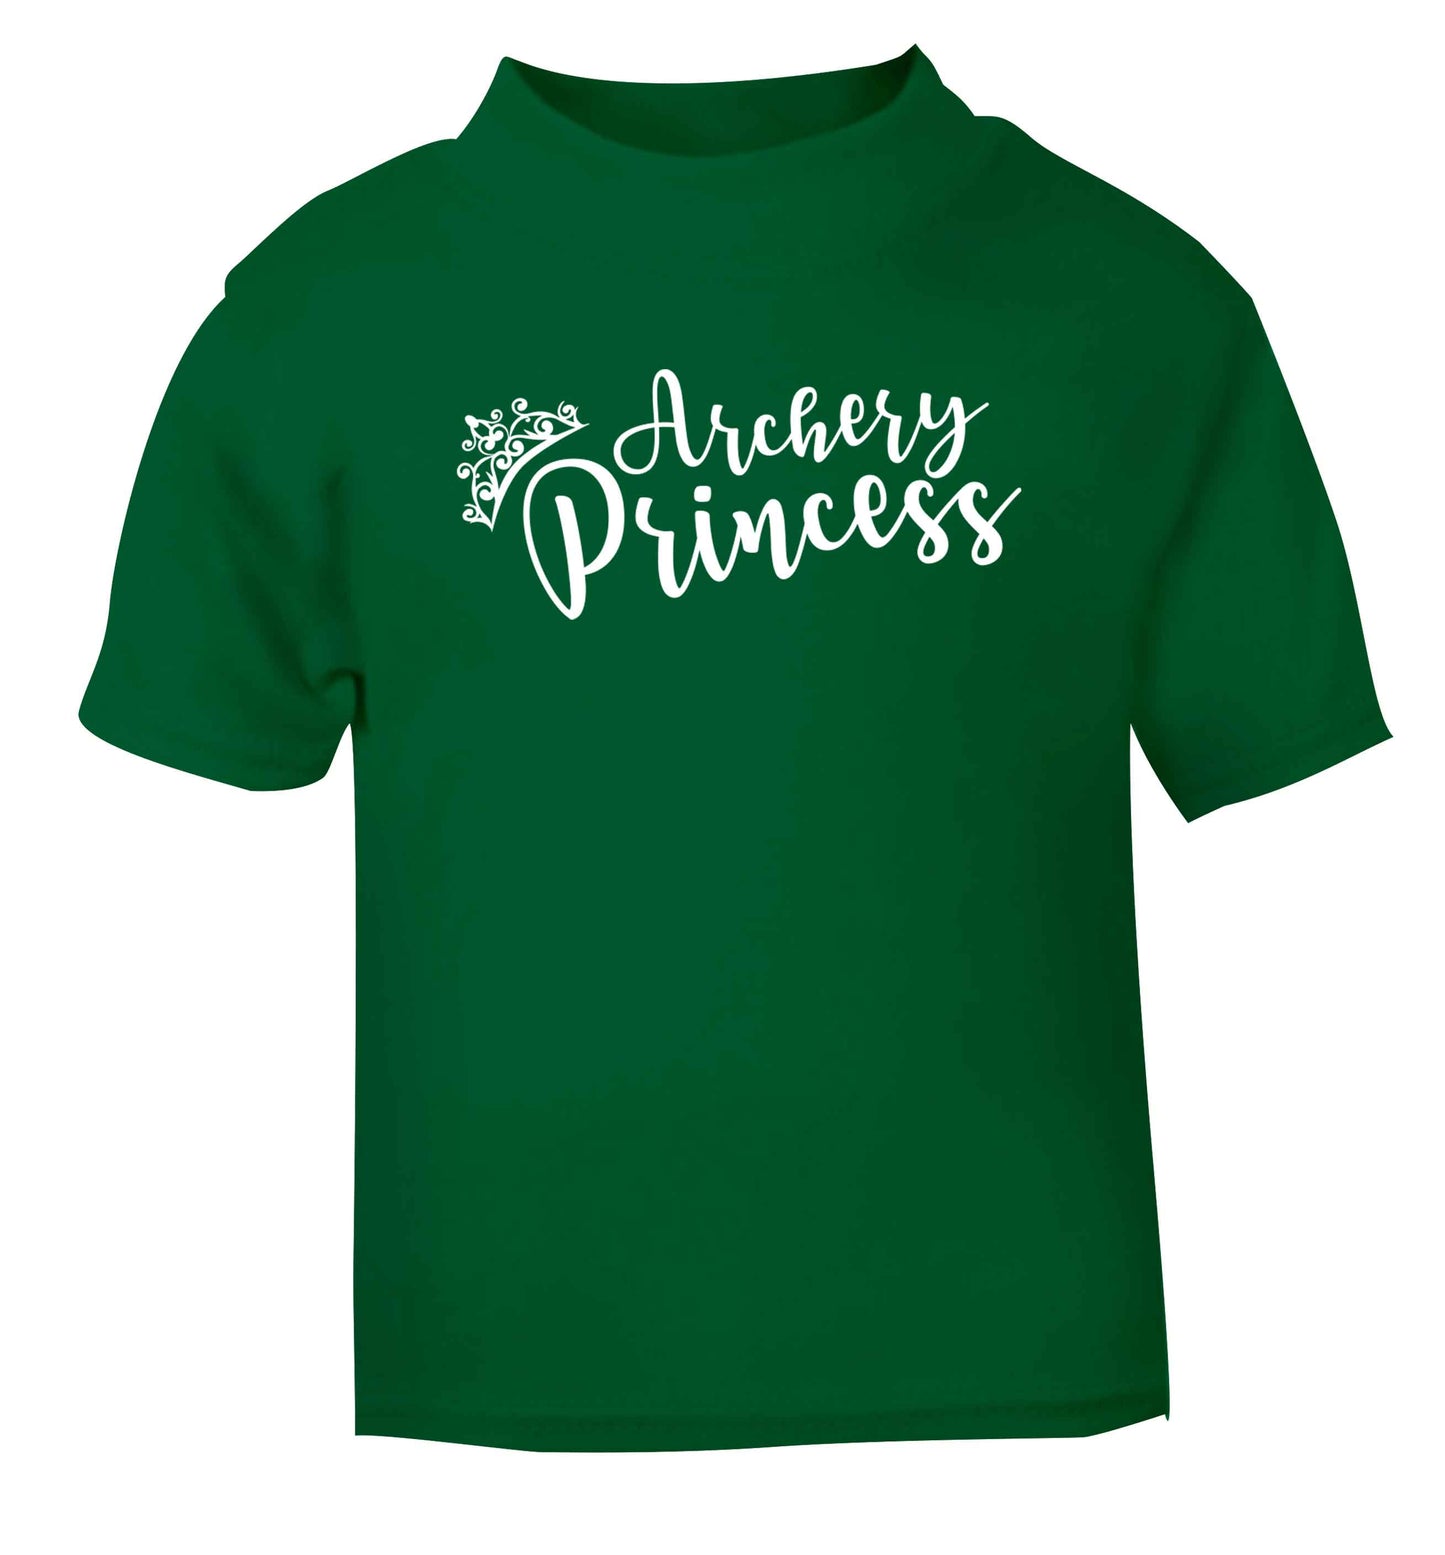 Archery princess green Baby Toddler Tshirt 2 Years